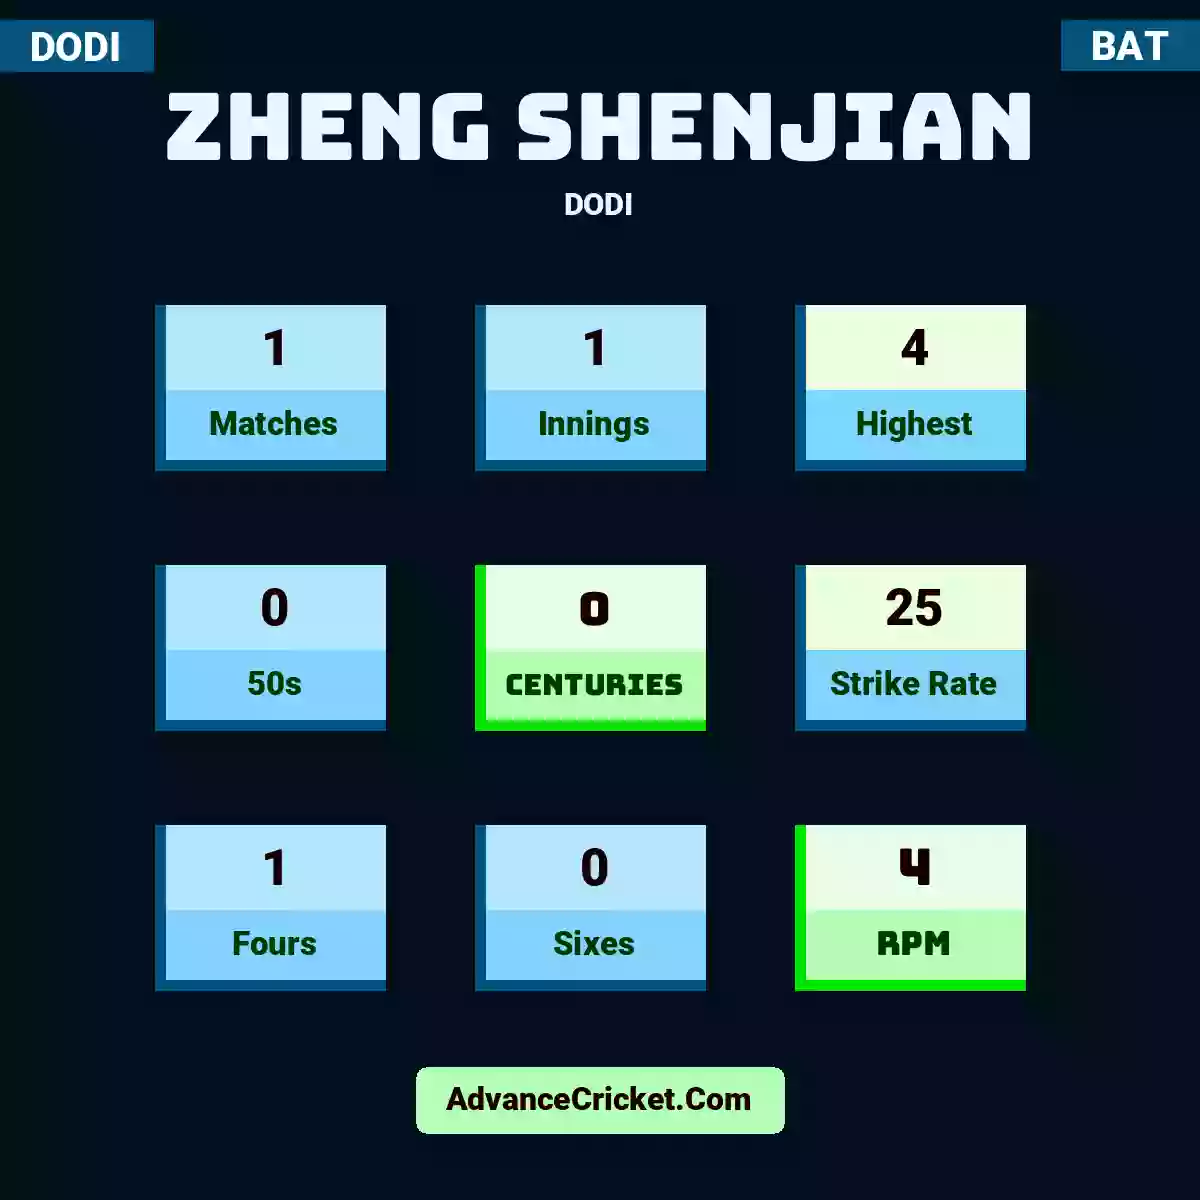 Zheng Shenjian DODI , Zheng Shenjian played 1 matches, scored 4 runs as highest, 0 half-centuries, and 0 centuries, with a strike rate of 25. Z.Shenjian hit 1 fours and 0 sixes, with an RPM of 4.